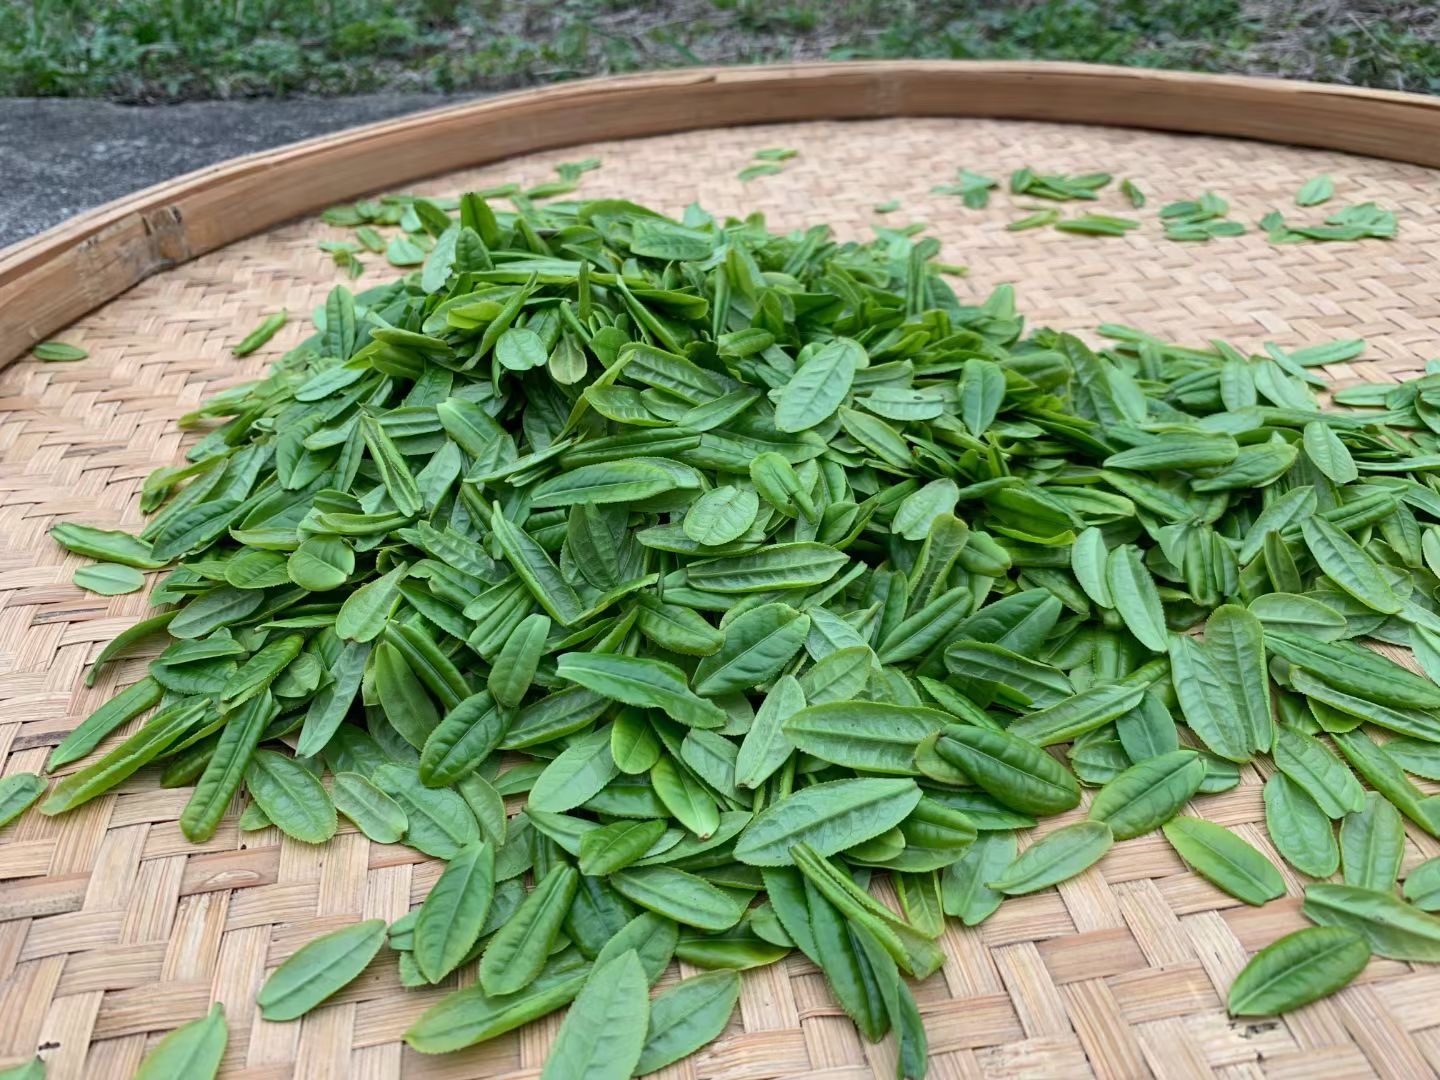 A pile of fresh single tea leaf pluckings for Lu An Gua Pian green tea on a woven bamboo tray.